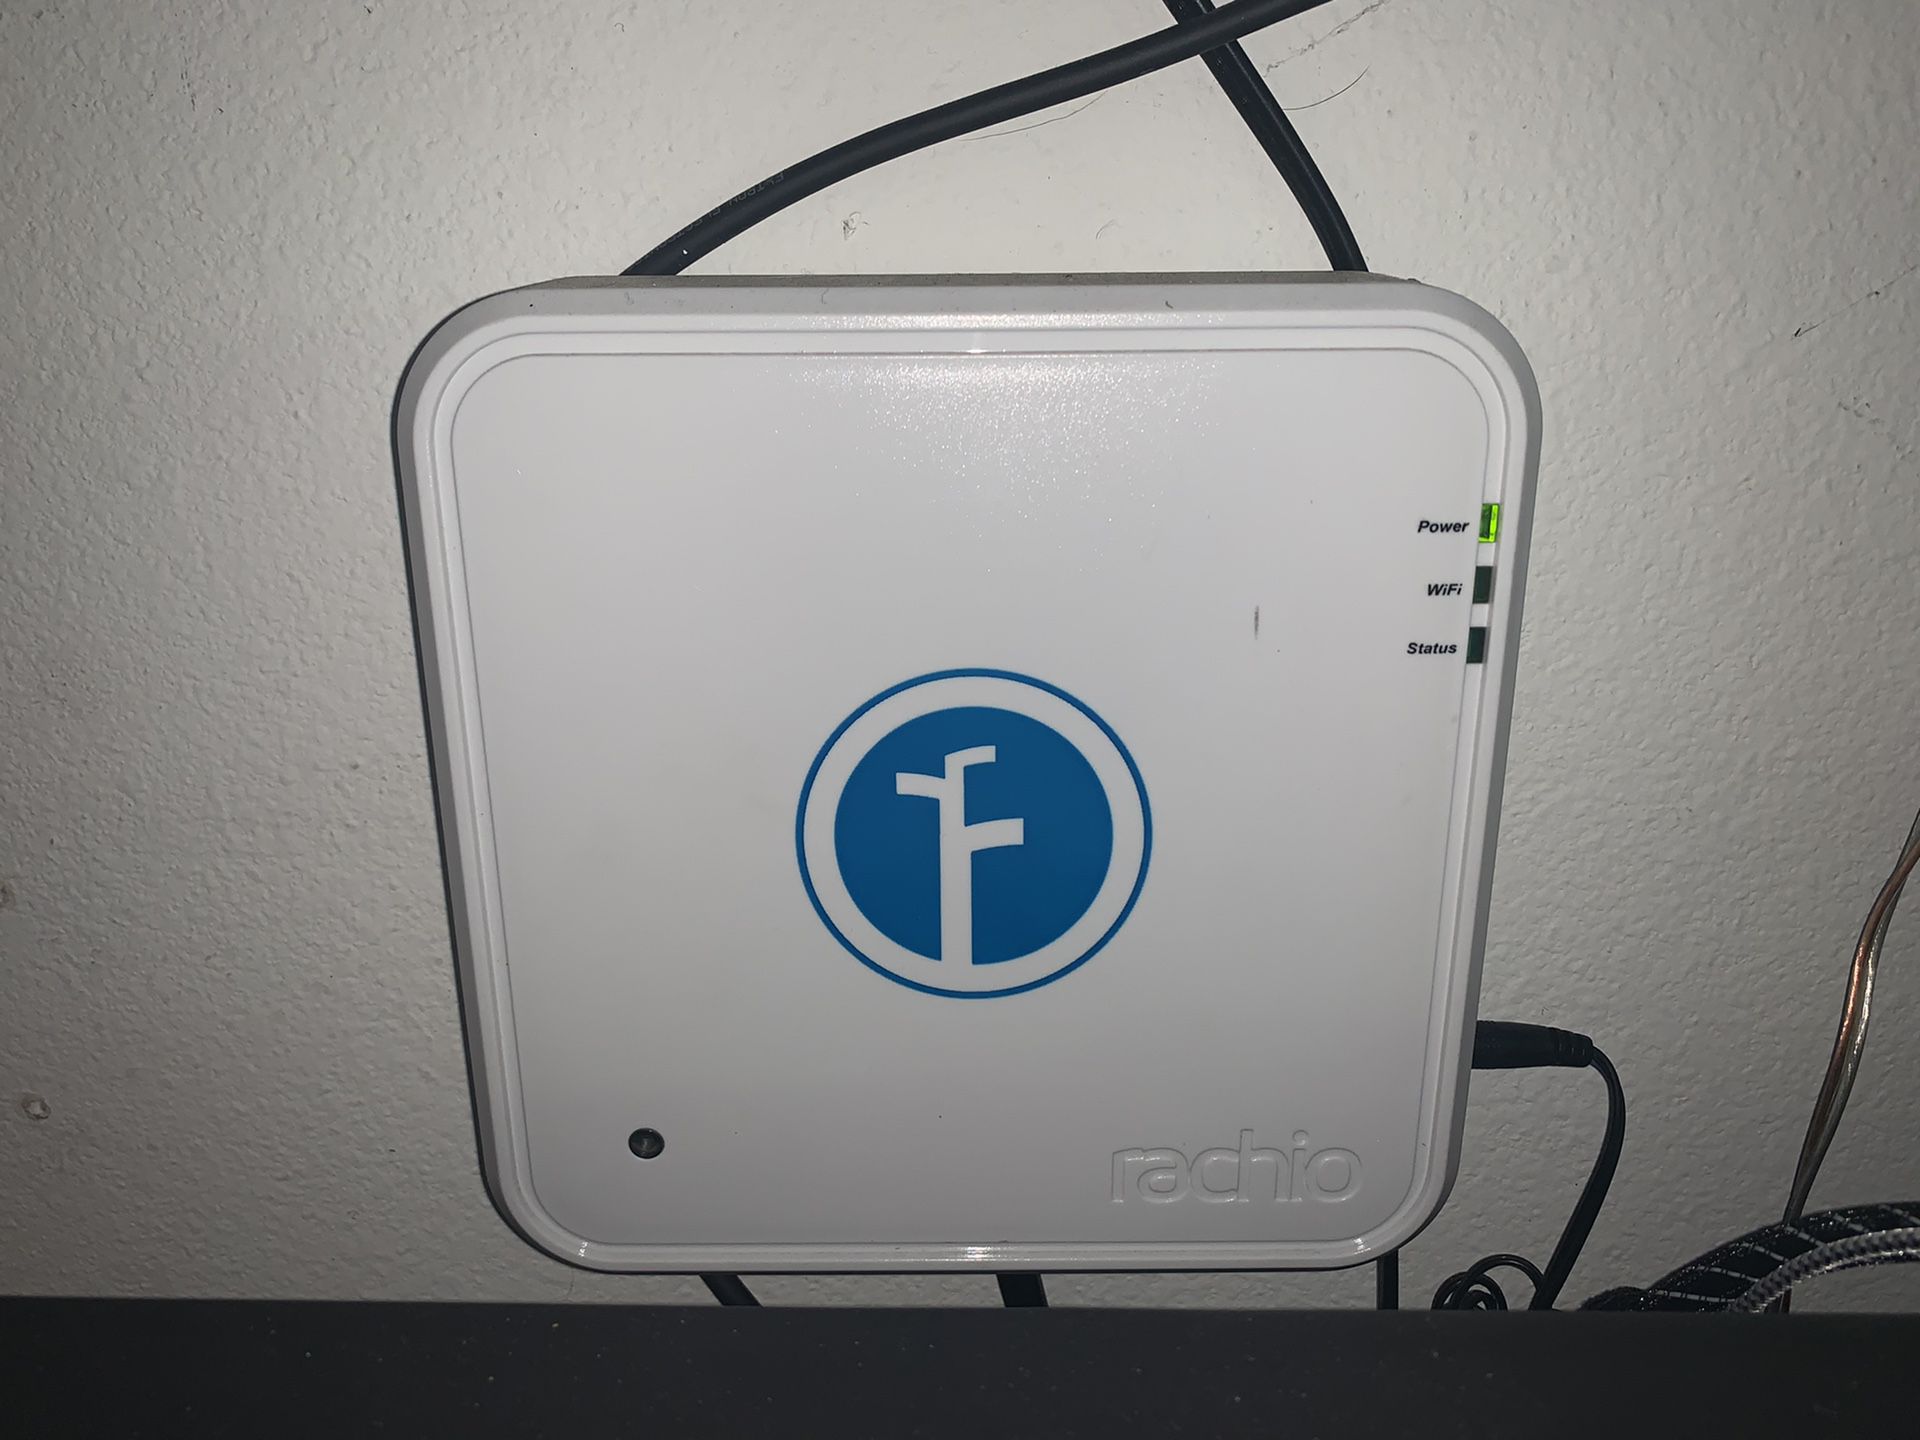 Rachio Gen 1 WiFi smart sprinkler controller (8 zone)